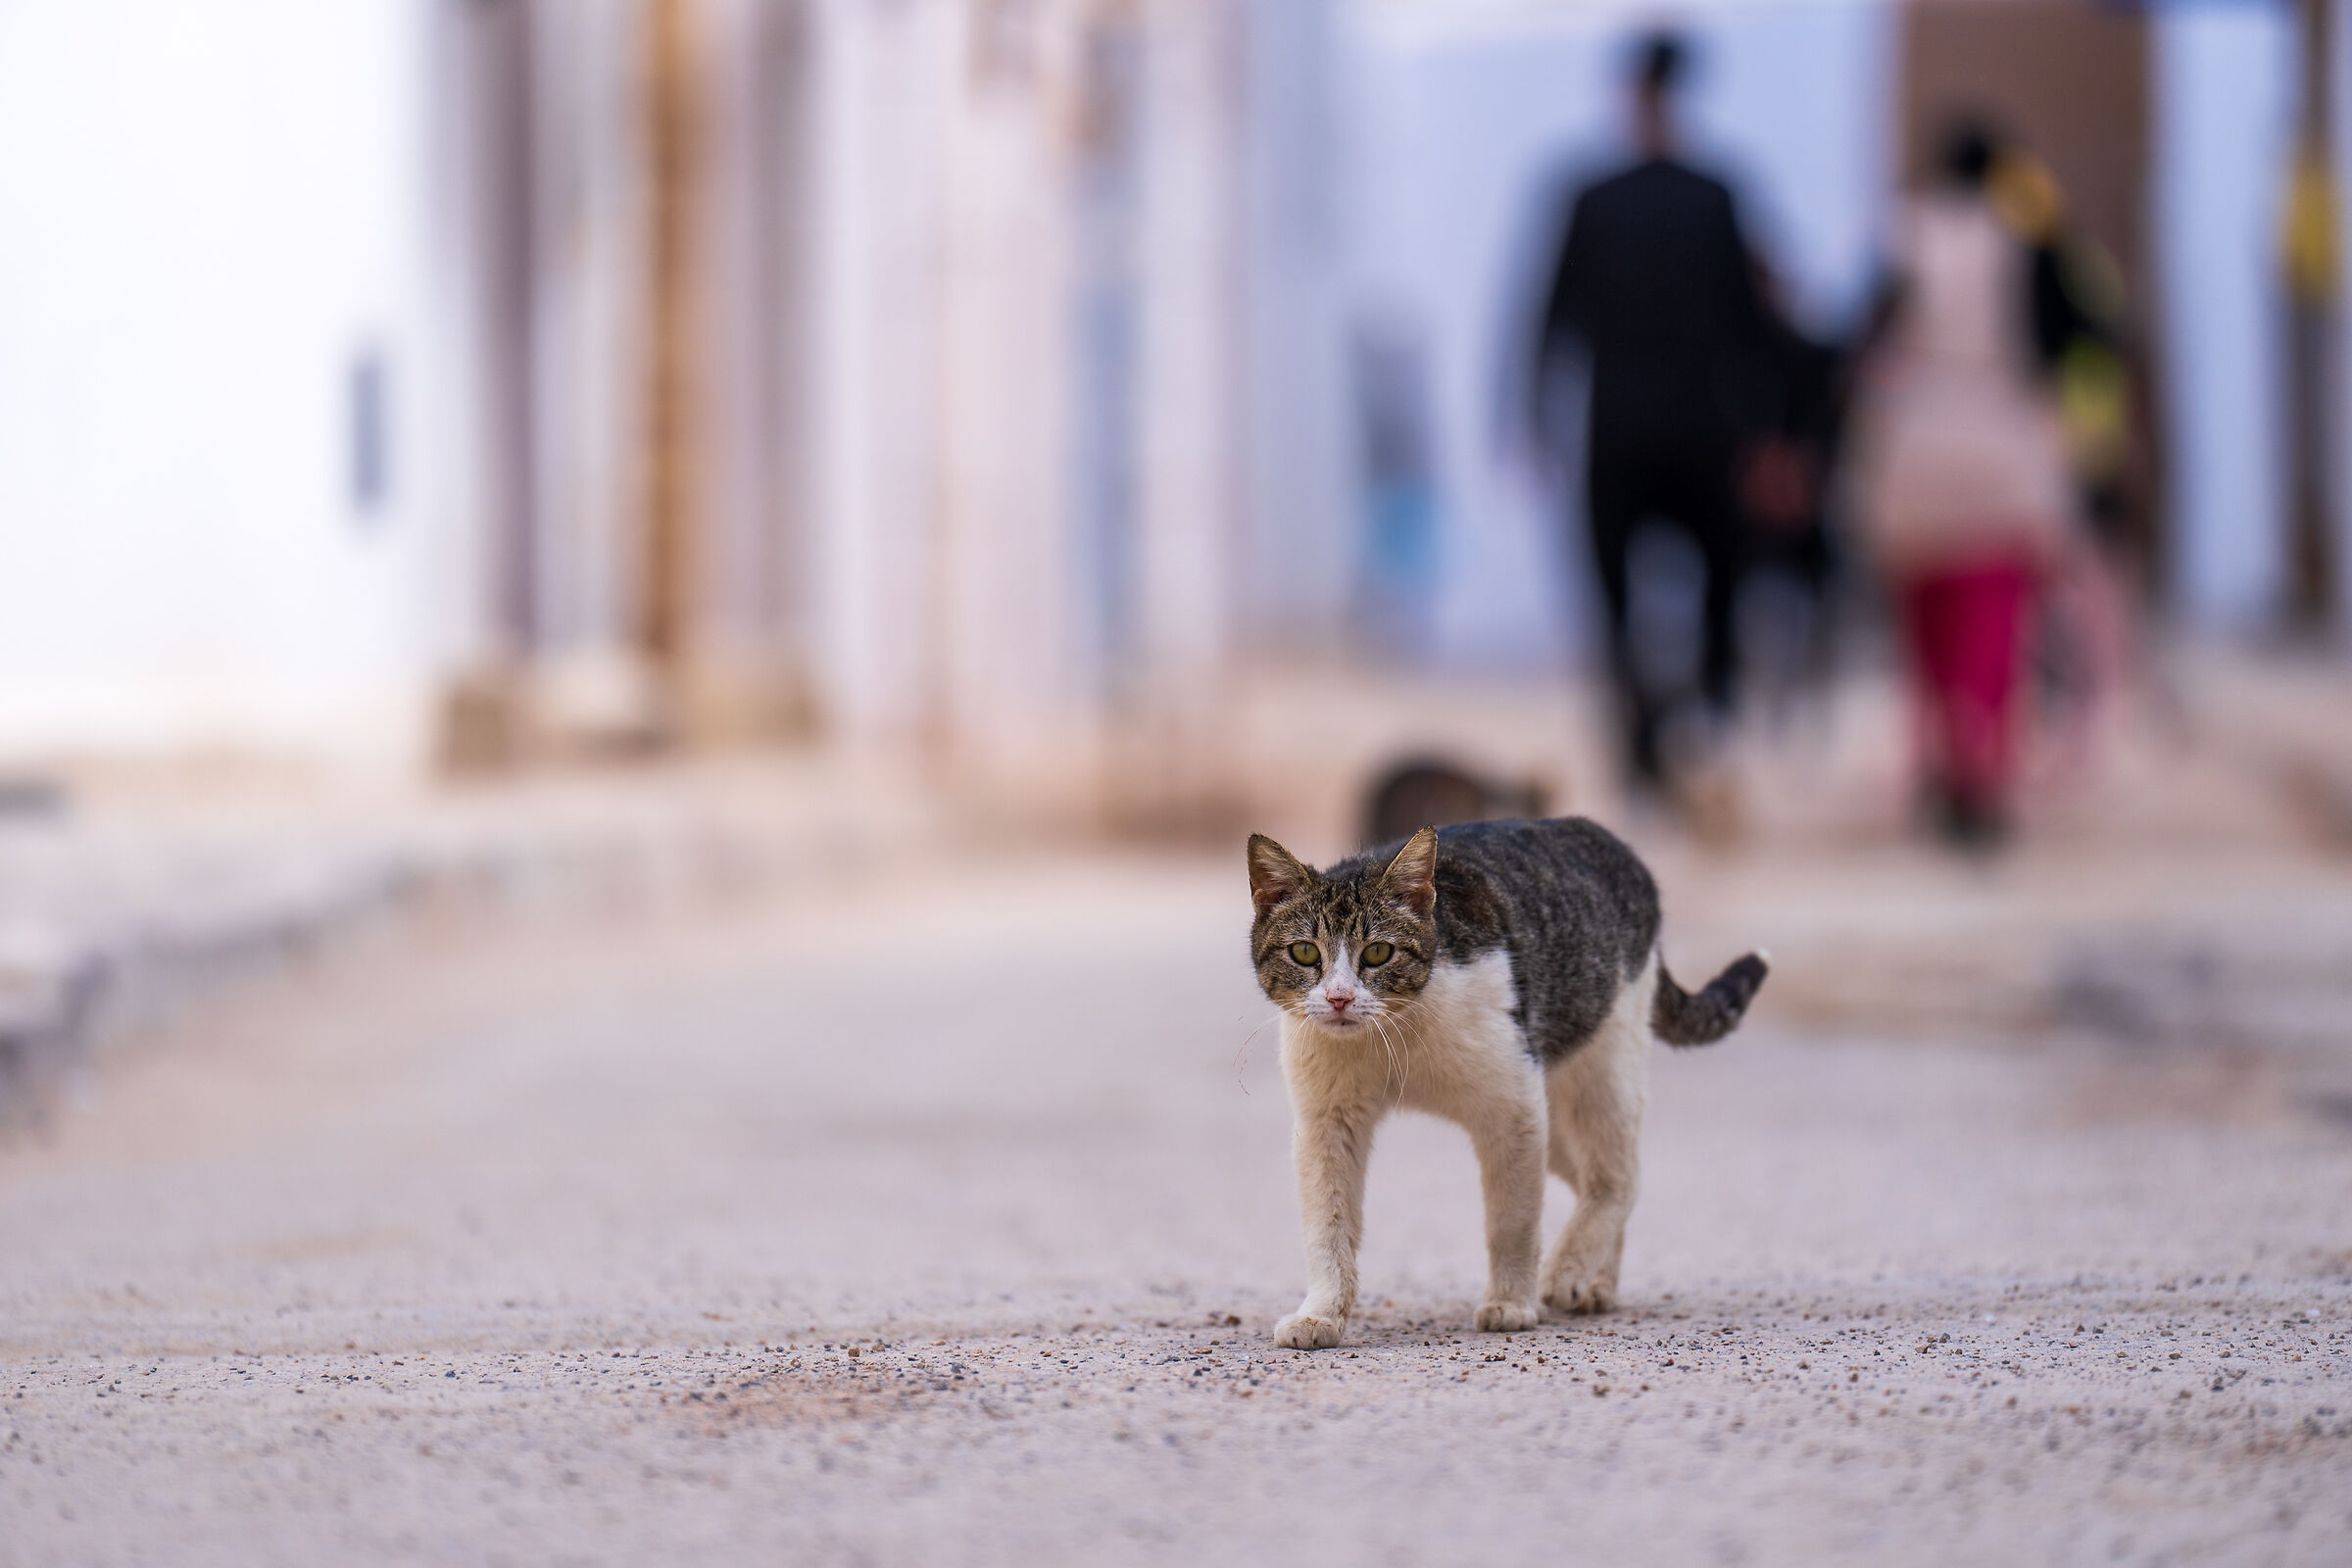 Cats of the Medina of Rabat...